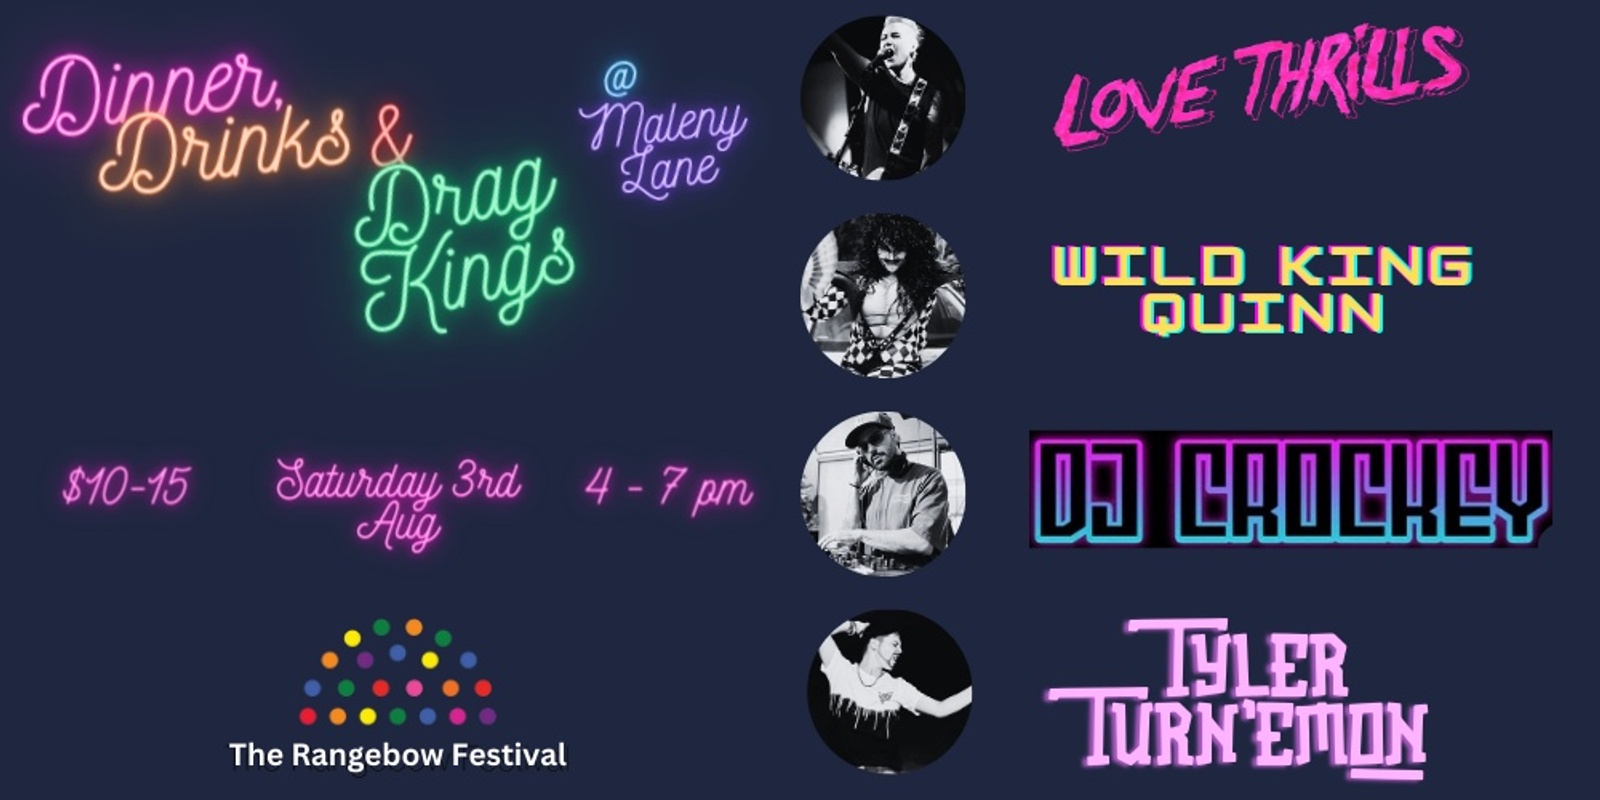 Banner image for Dinner, Drinks & Drag Kings with Love Thrills